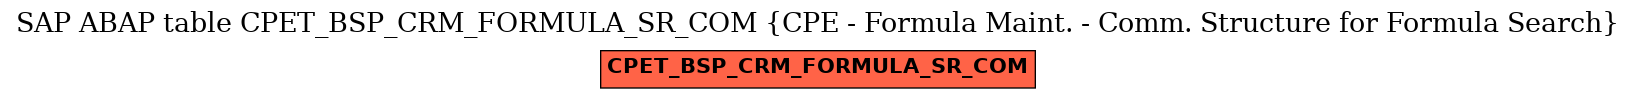 E-R Diagram for table CPET_BSP_CRM_FORMULA_SR_COM (CPE - Formula Maint. - Comm. Structure for Formula Search)